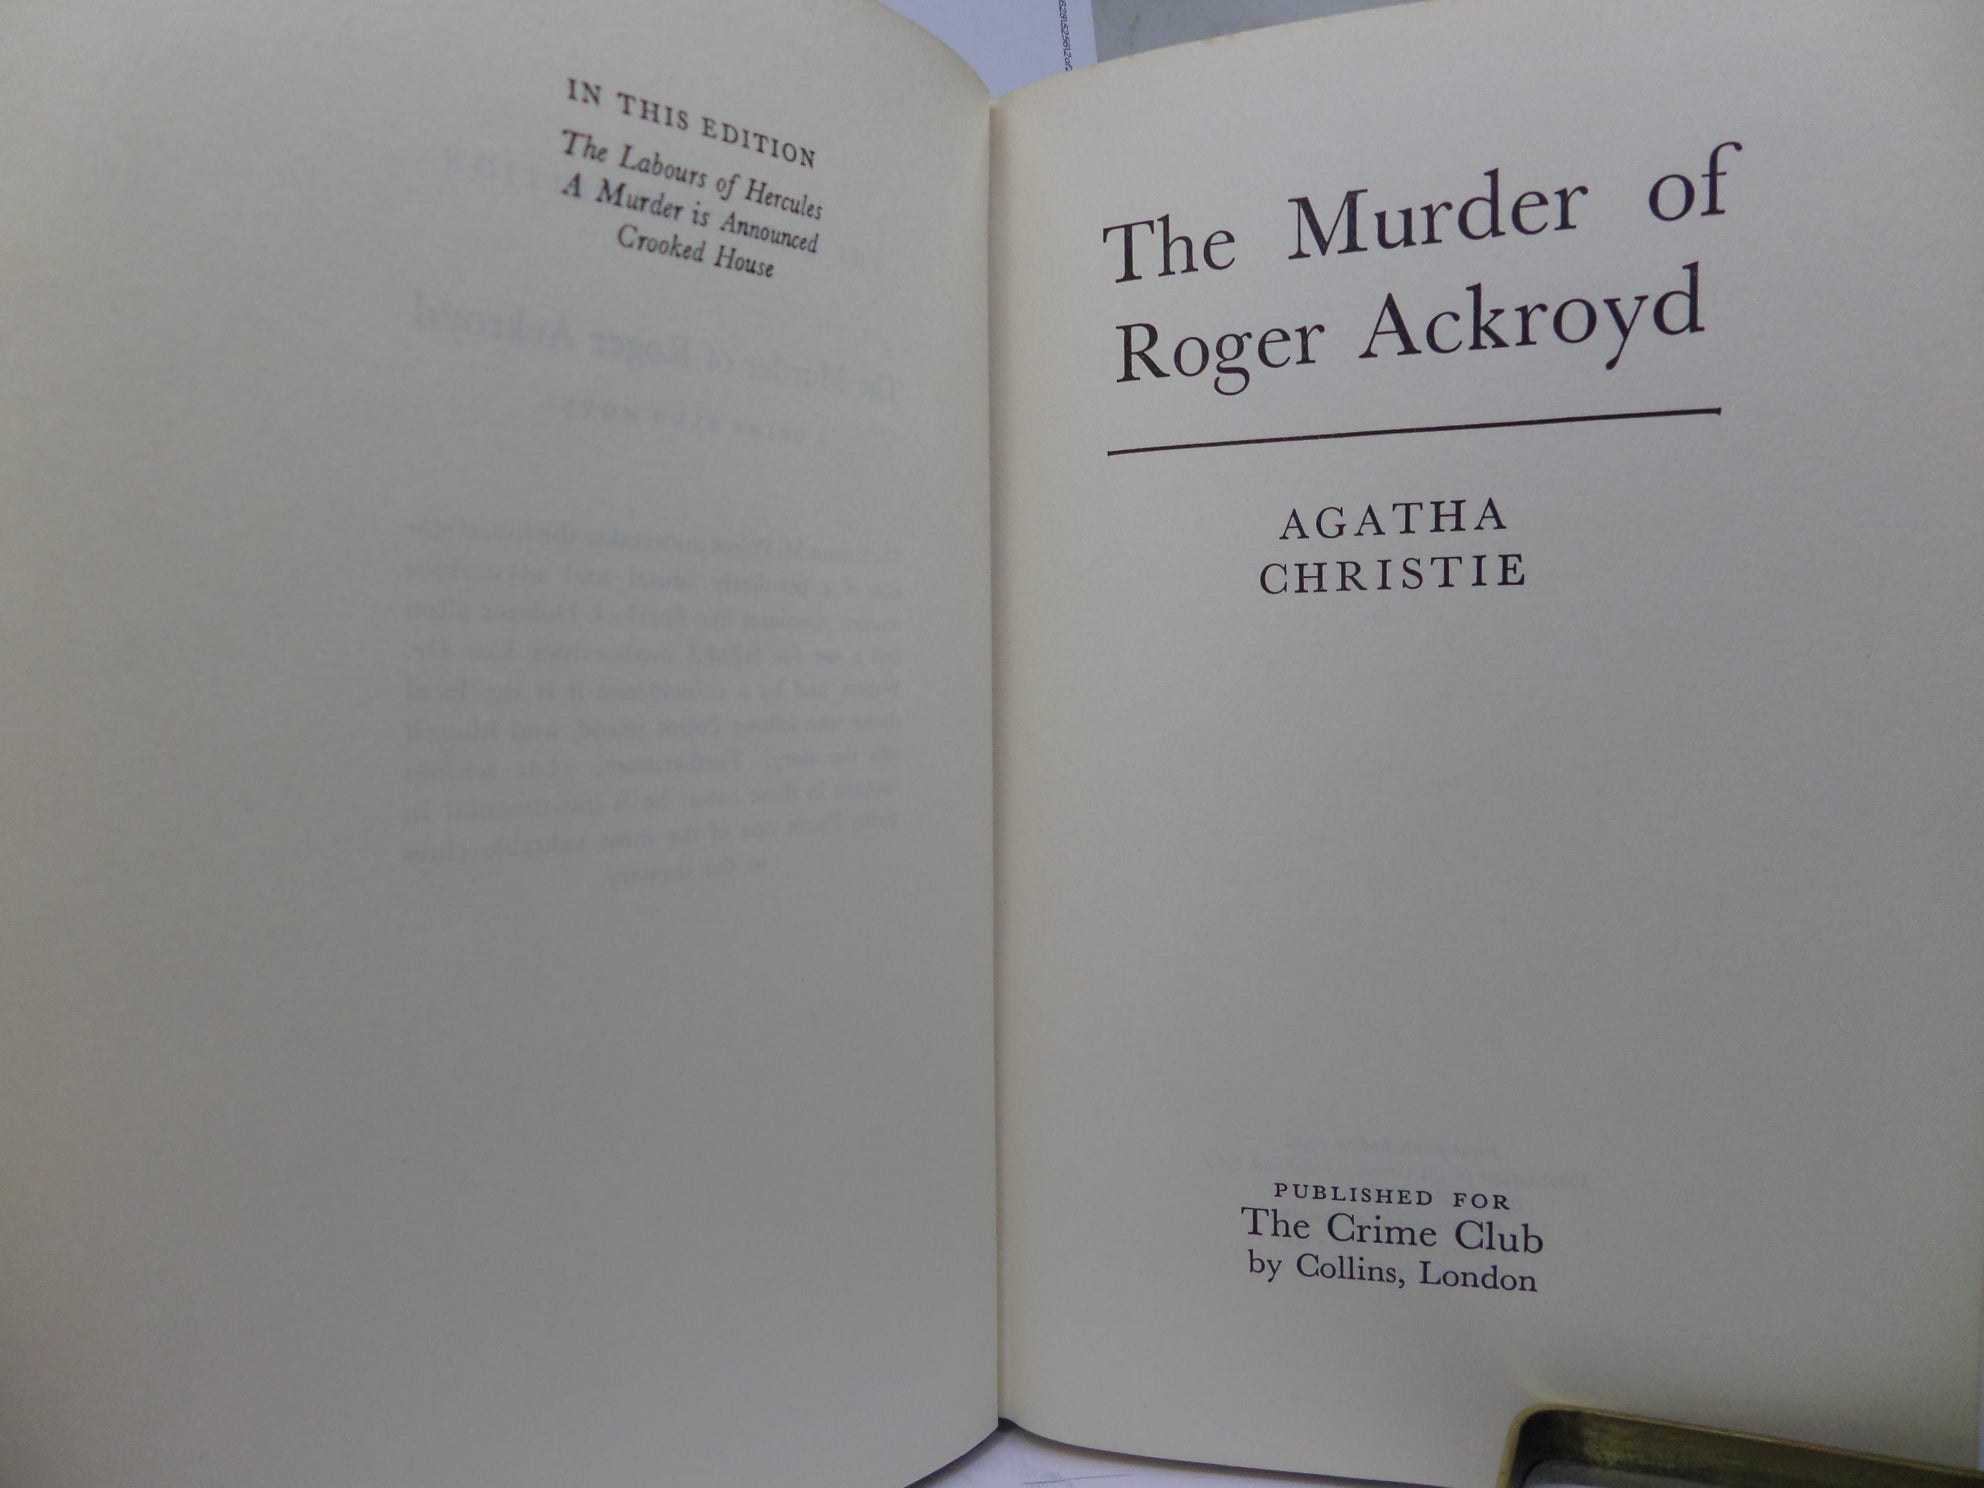 THE MURDER OF ROGER ACKROYD BY AGATHA CHRISTIE 1967